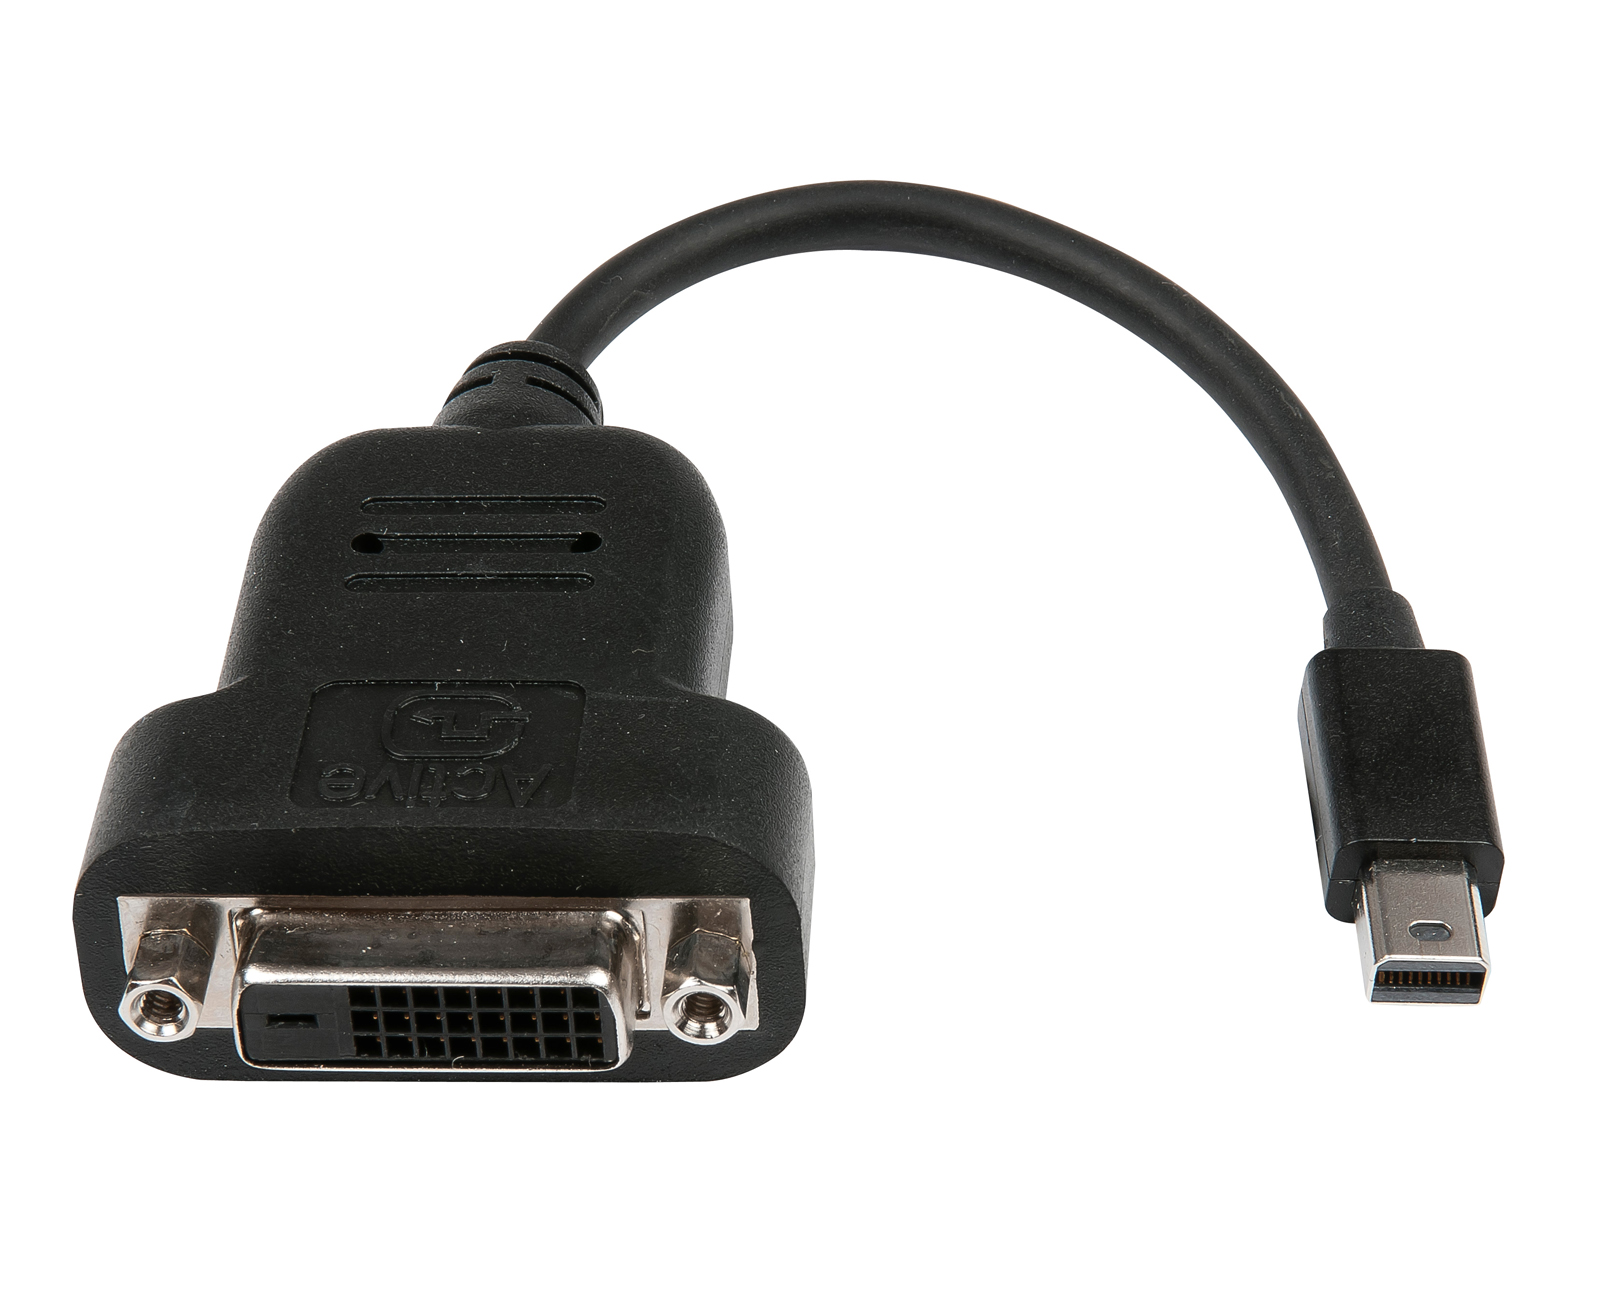 mini DisplayPort auf DVI-D Single Link (aktiv)